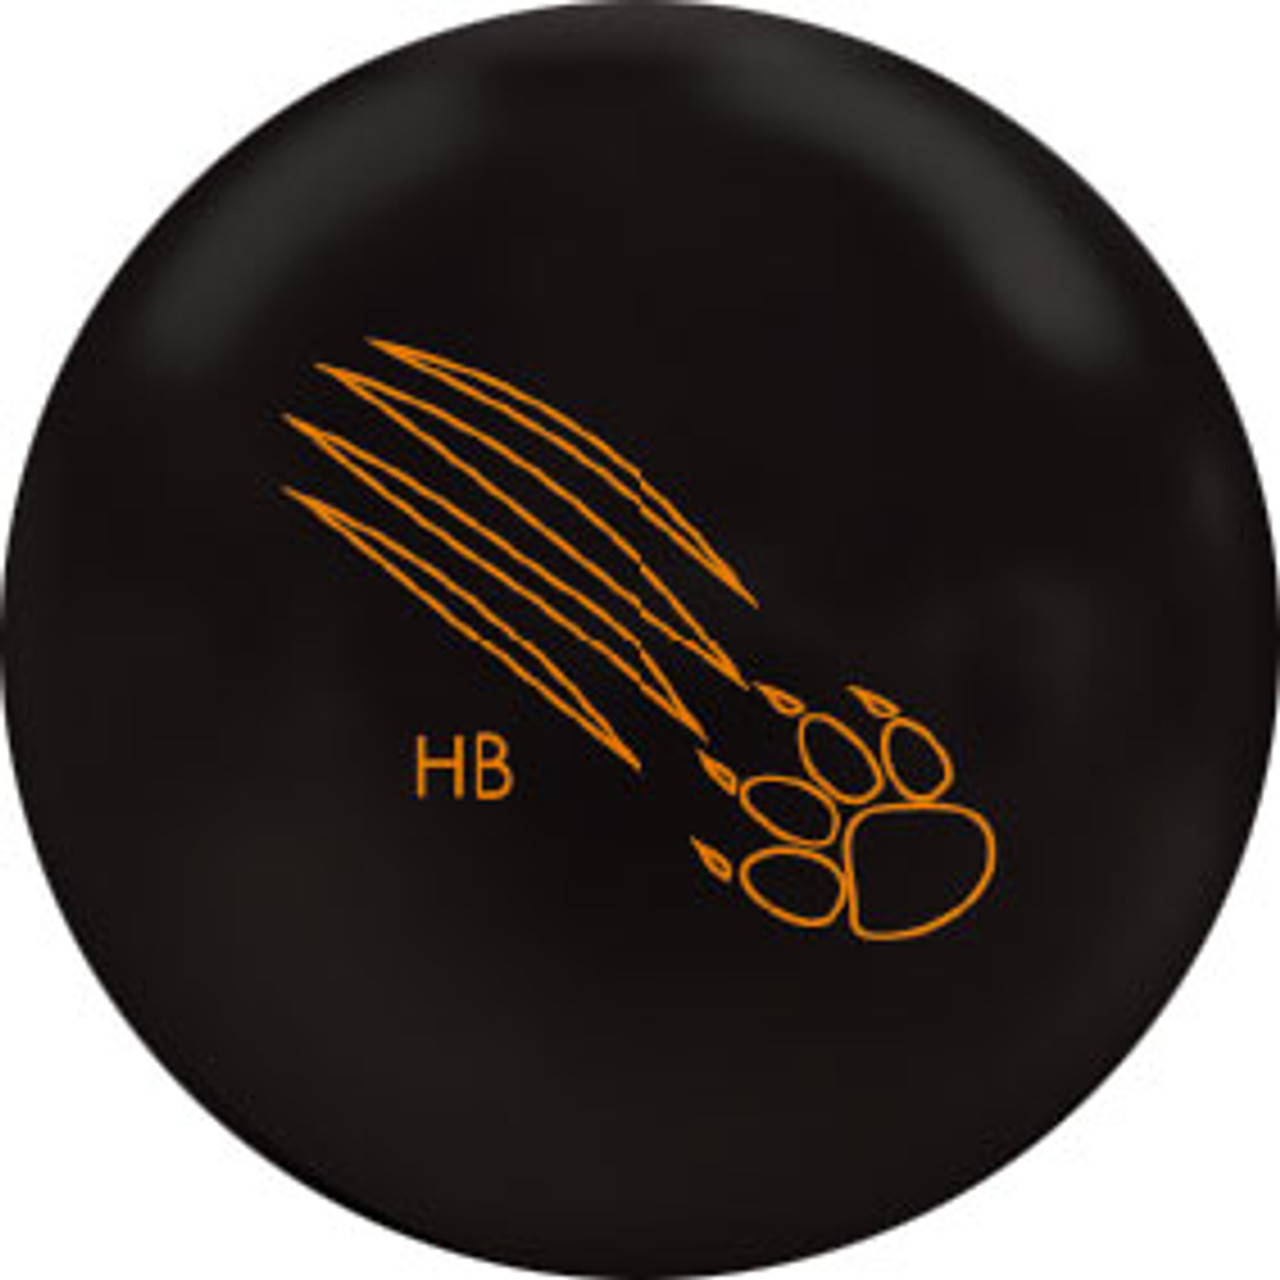 900 Global Honey Badger Black Urethane Bowling Ball - 123Bowl